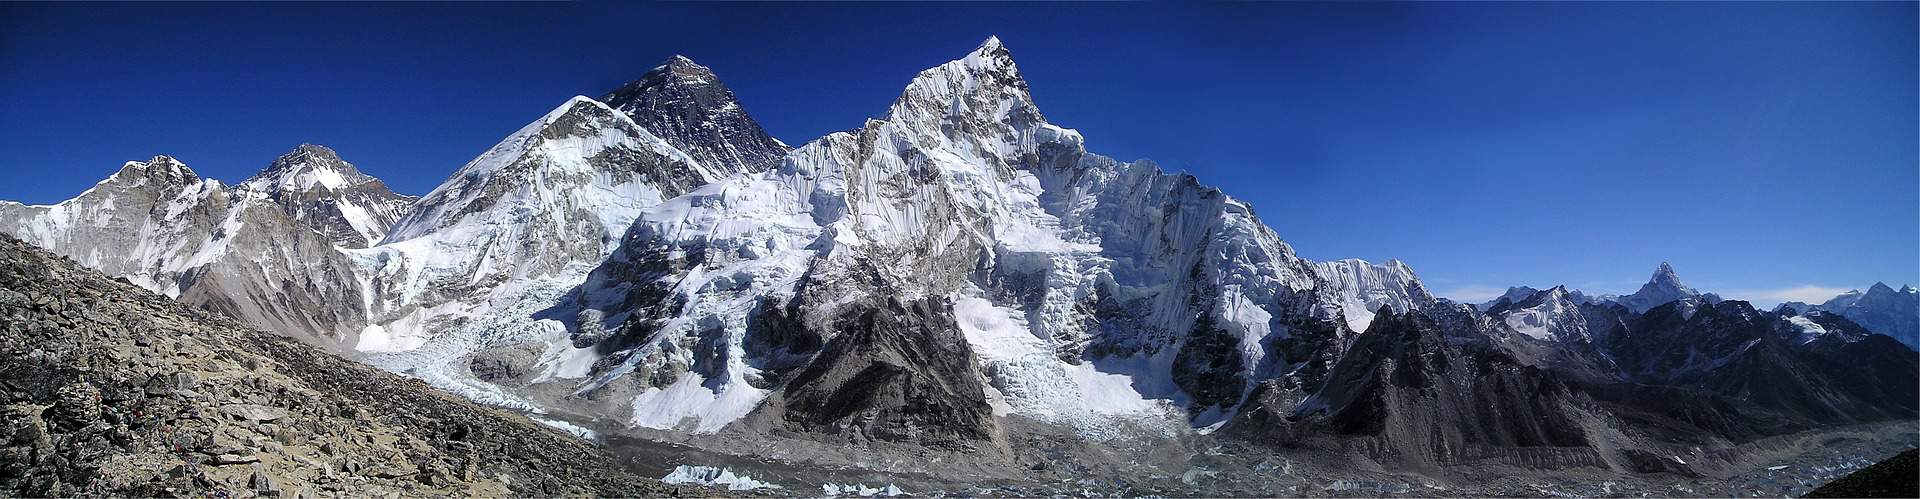 हिमालय माउंट एवरेस्ट पर्वत शिखर